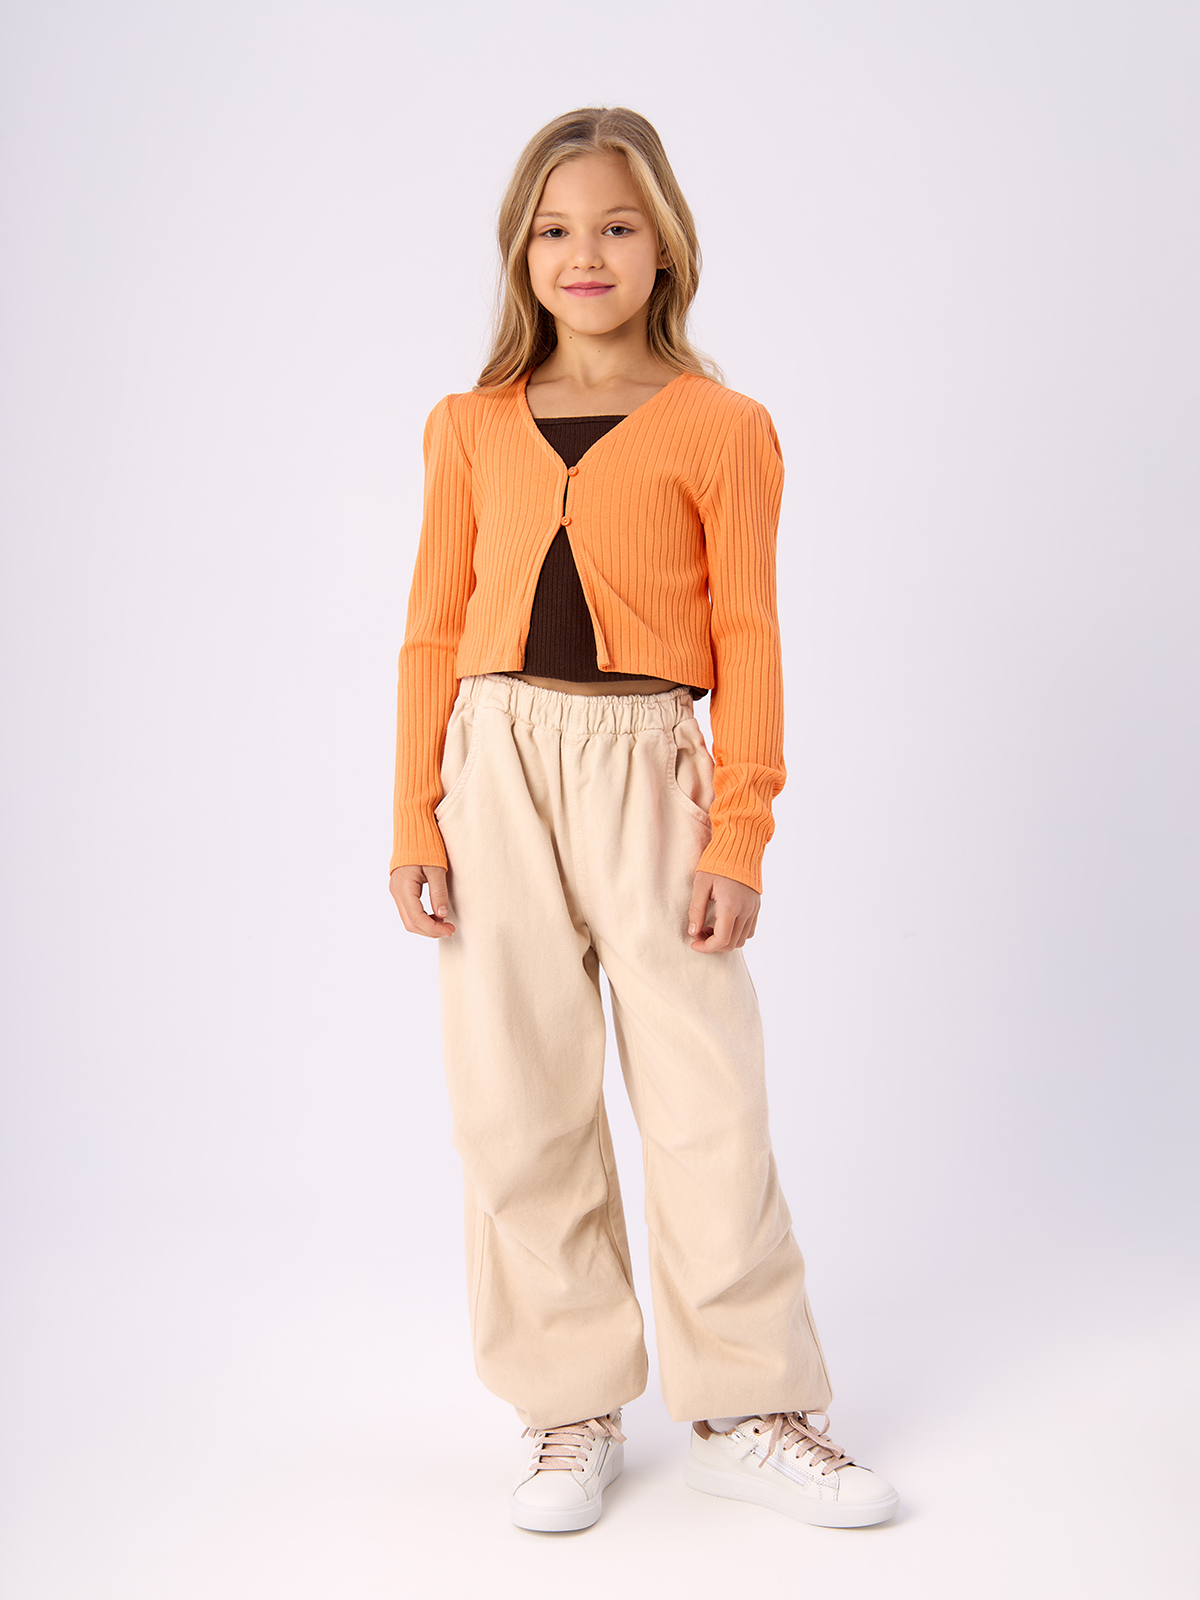 Кардиган H&M для девочек, оранжевый-002, размер 158/164, 1120731002 оранжевый кардиган тонкий gulliver 146